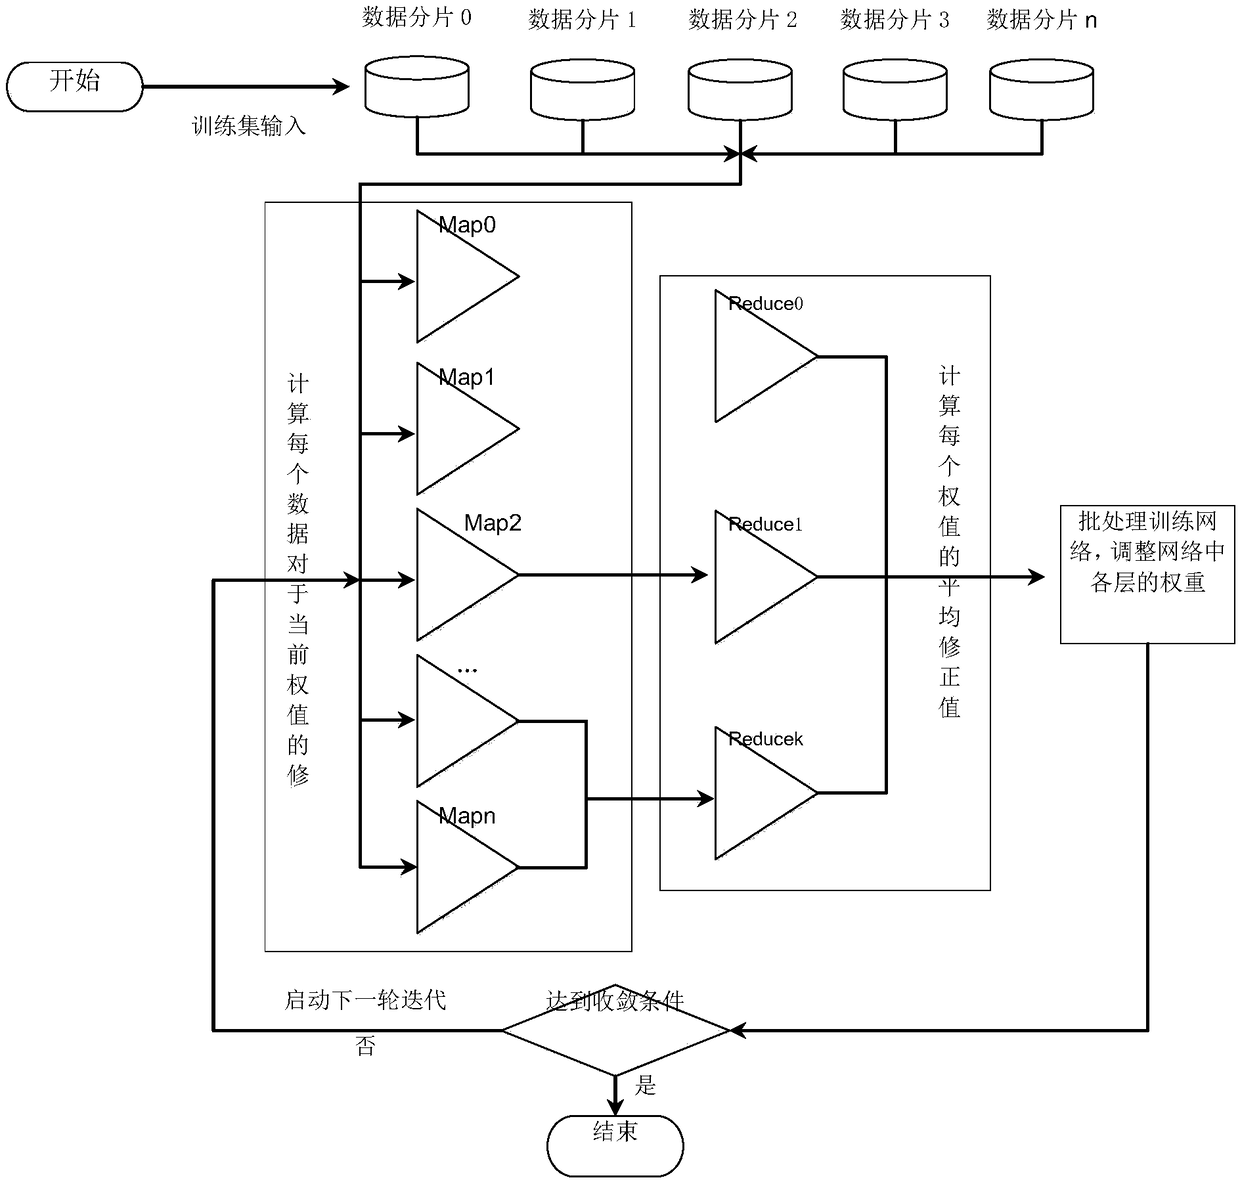 Building energy consumption prediction method based on BP neural network of MapReduce